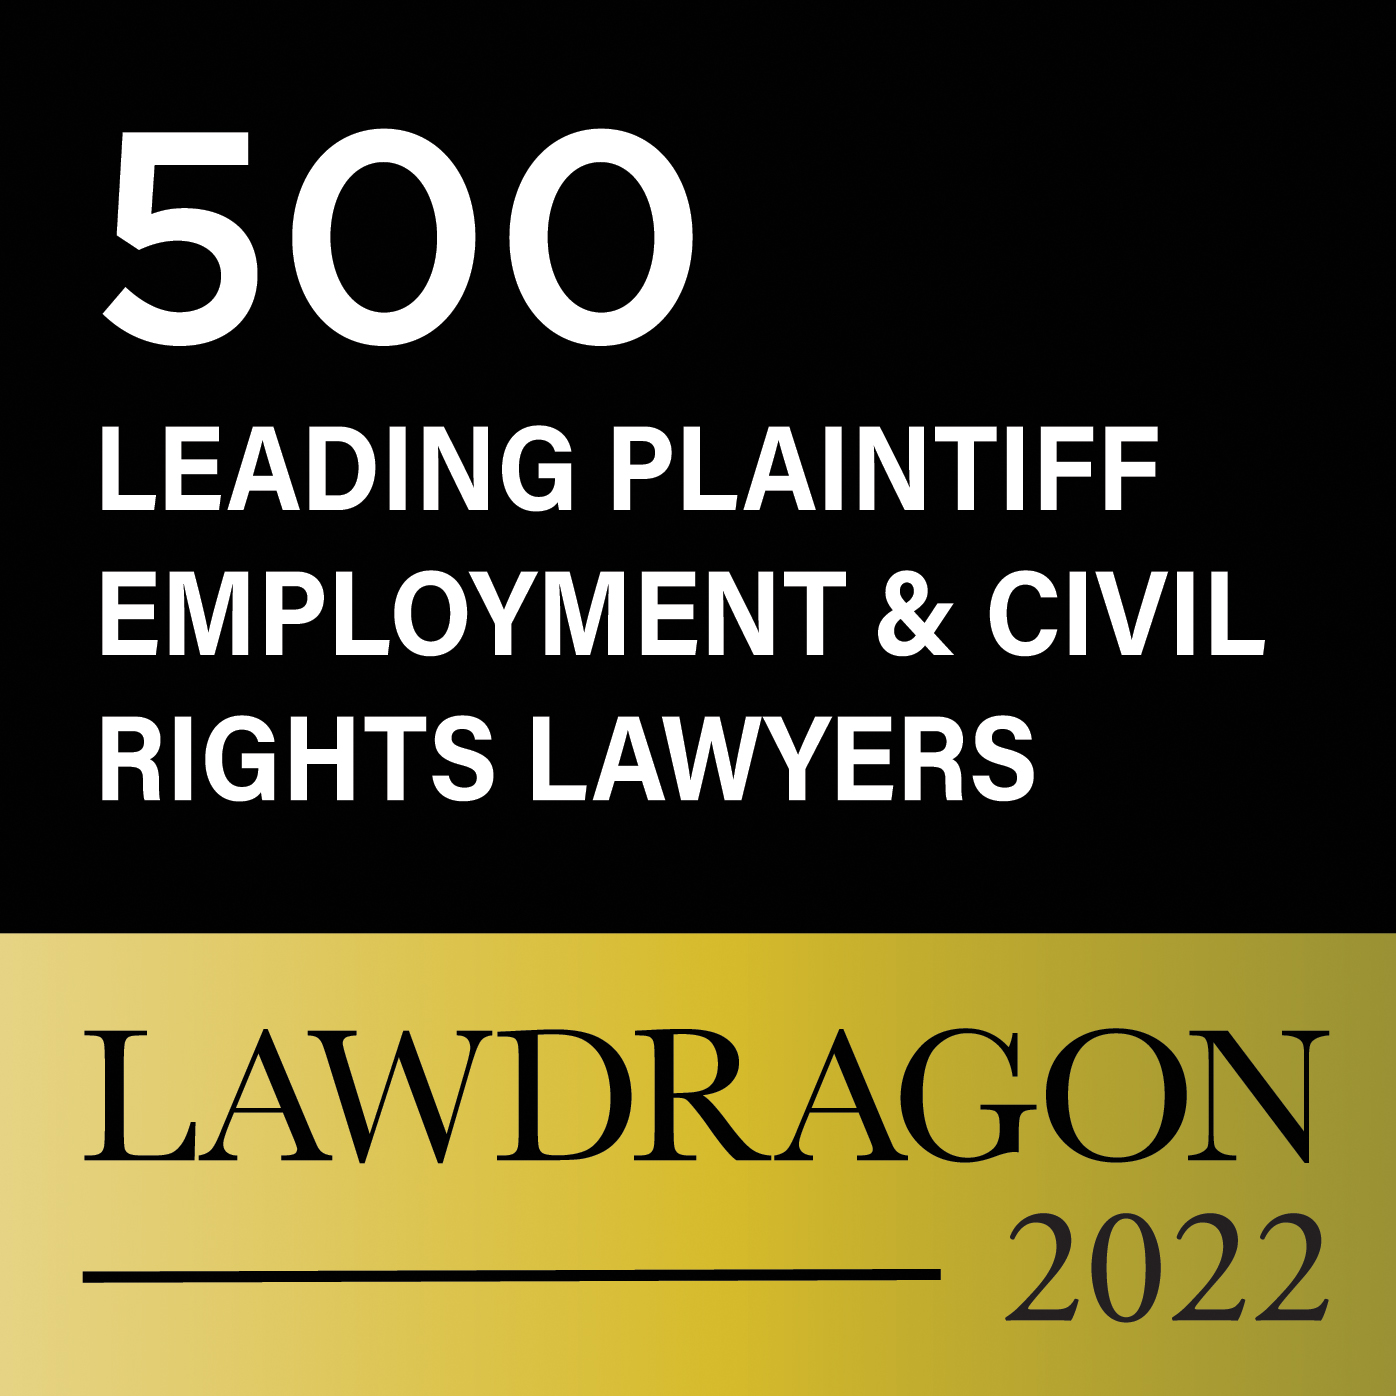 Law Dragon Leading Plaintiff Employment & Civil Rights Lawyers badge